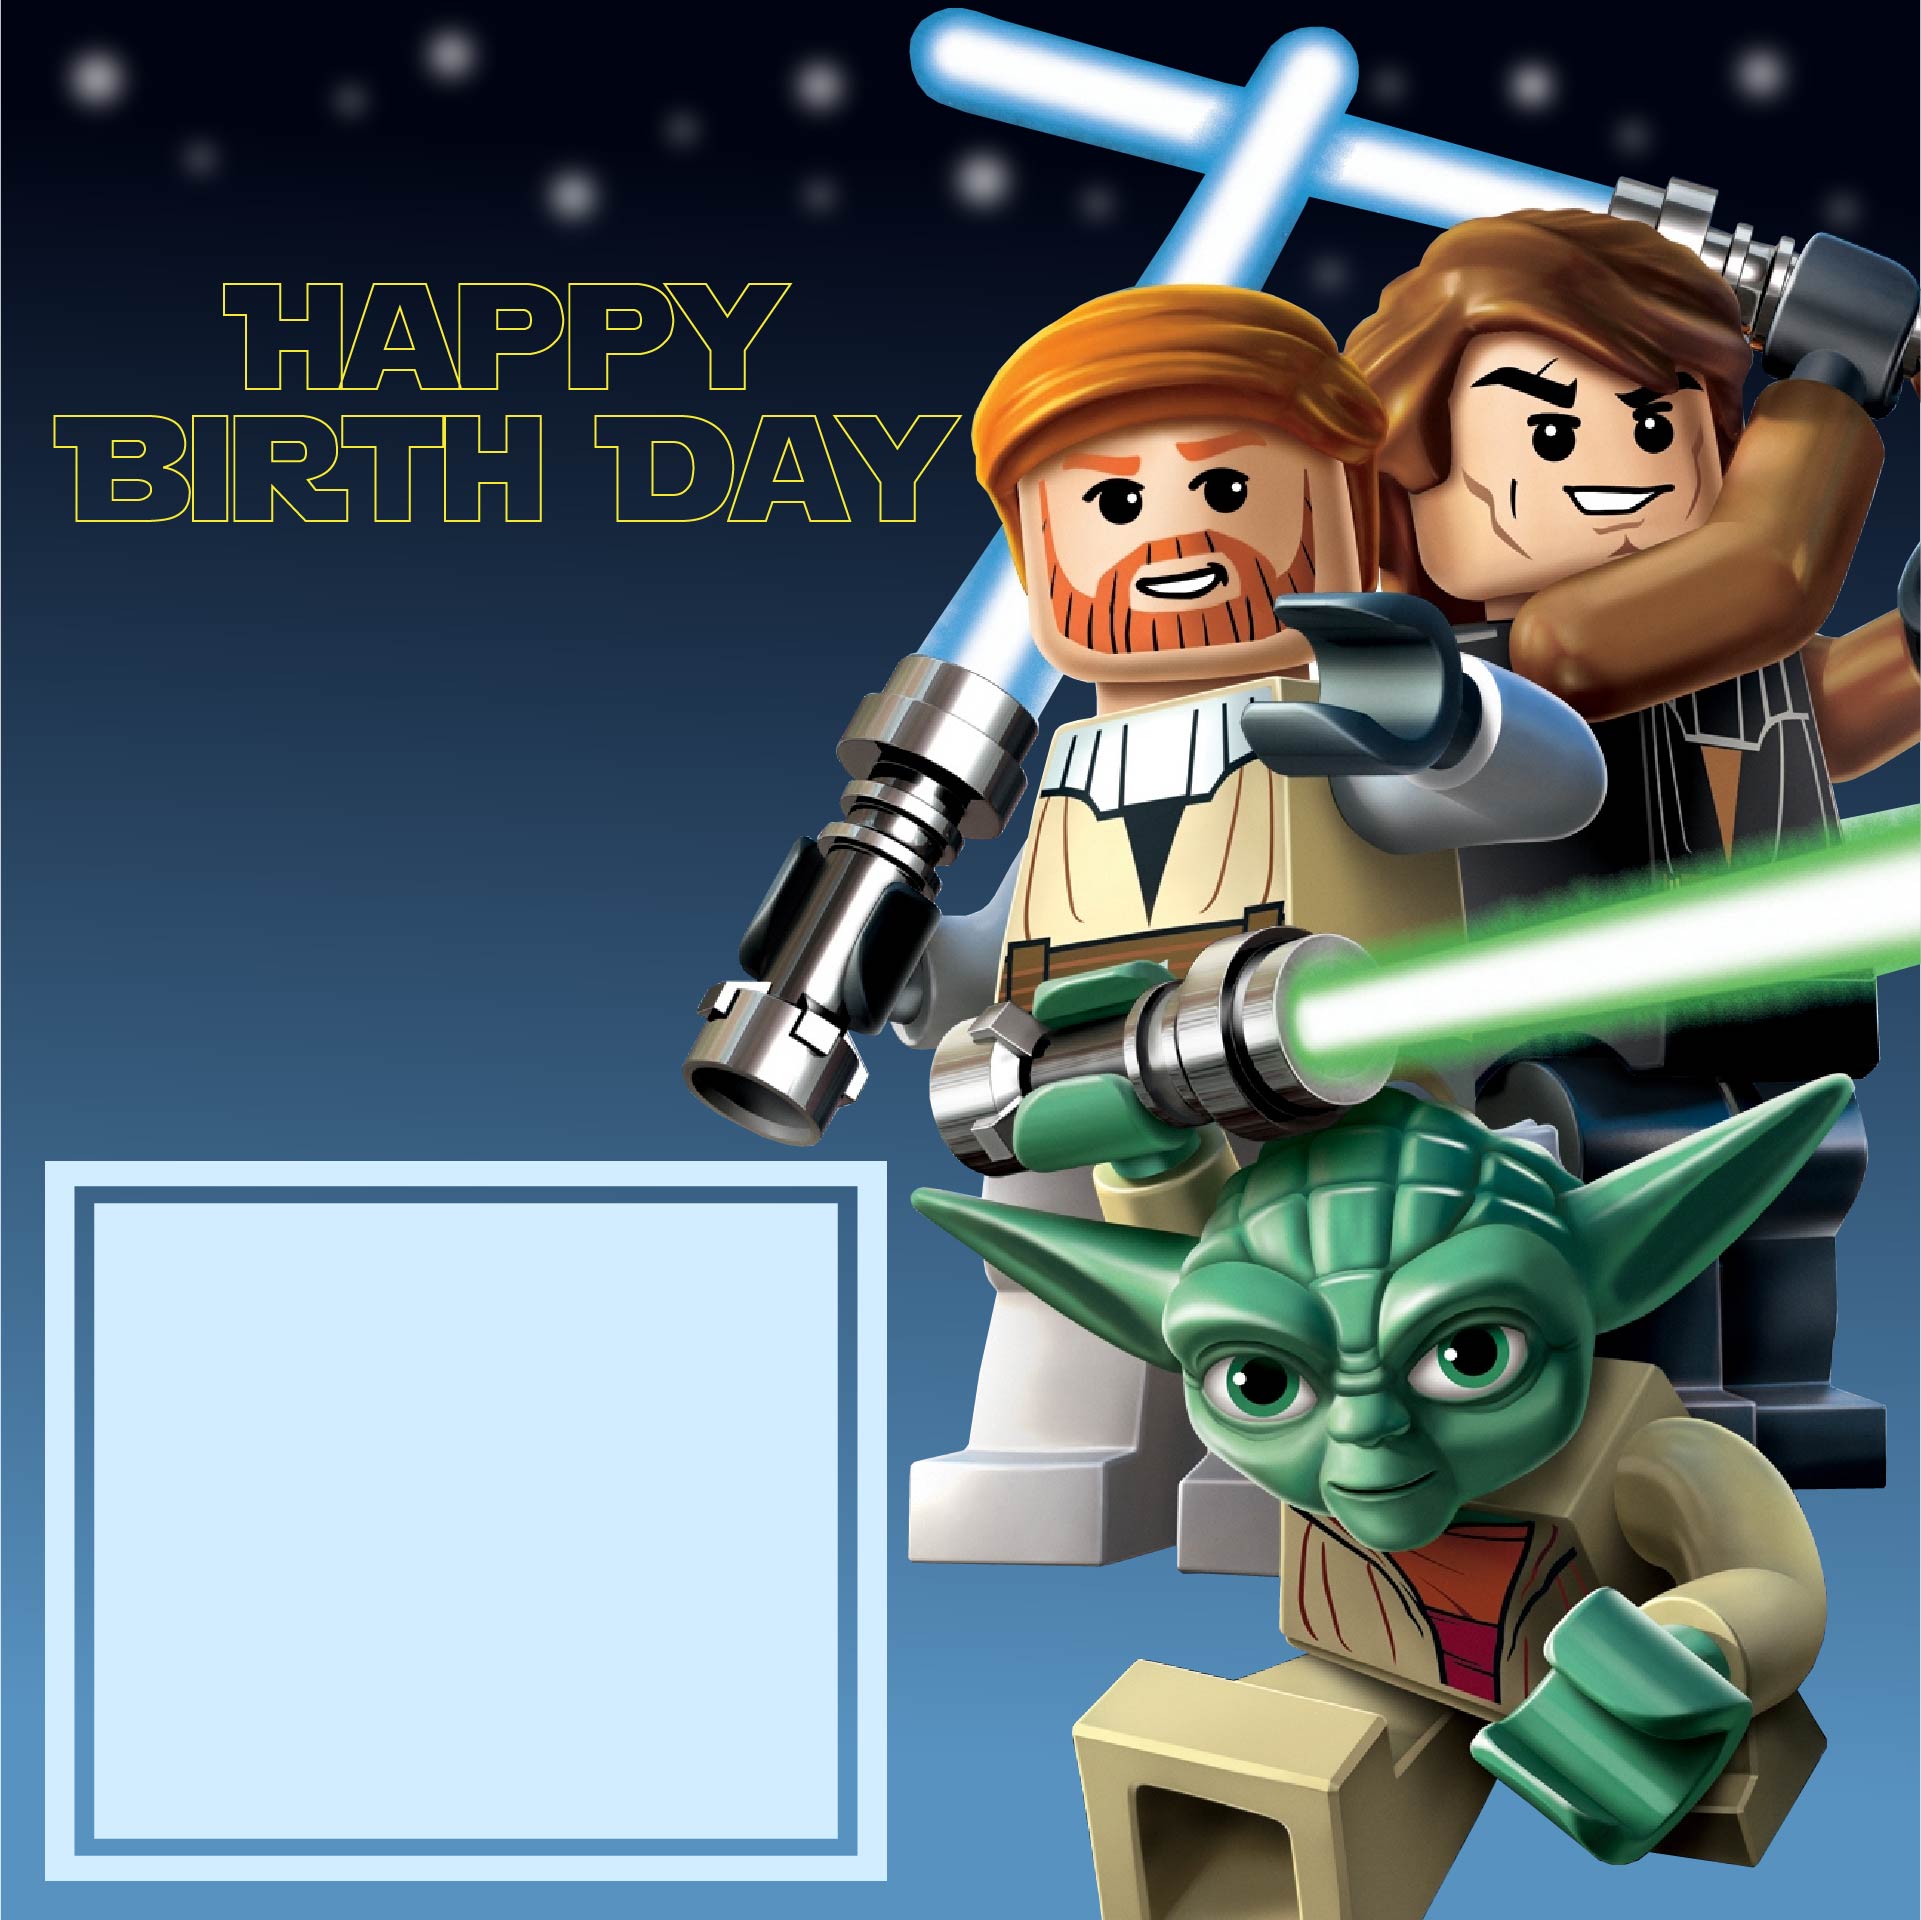 LEGO Star Wars Birthday Card Printable Free